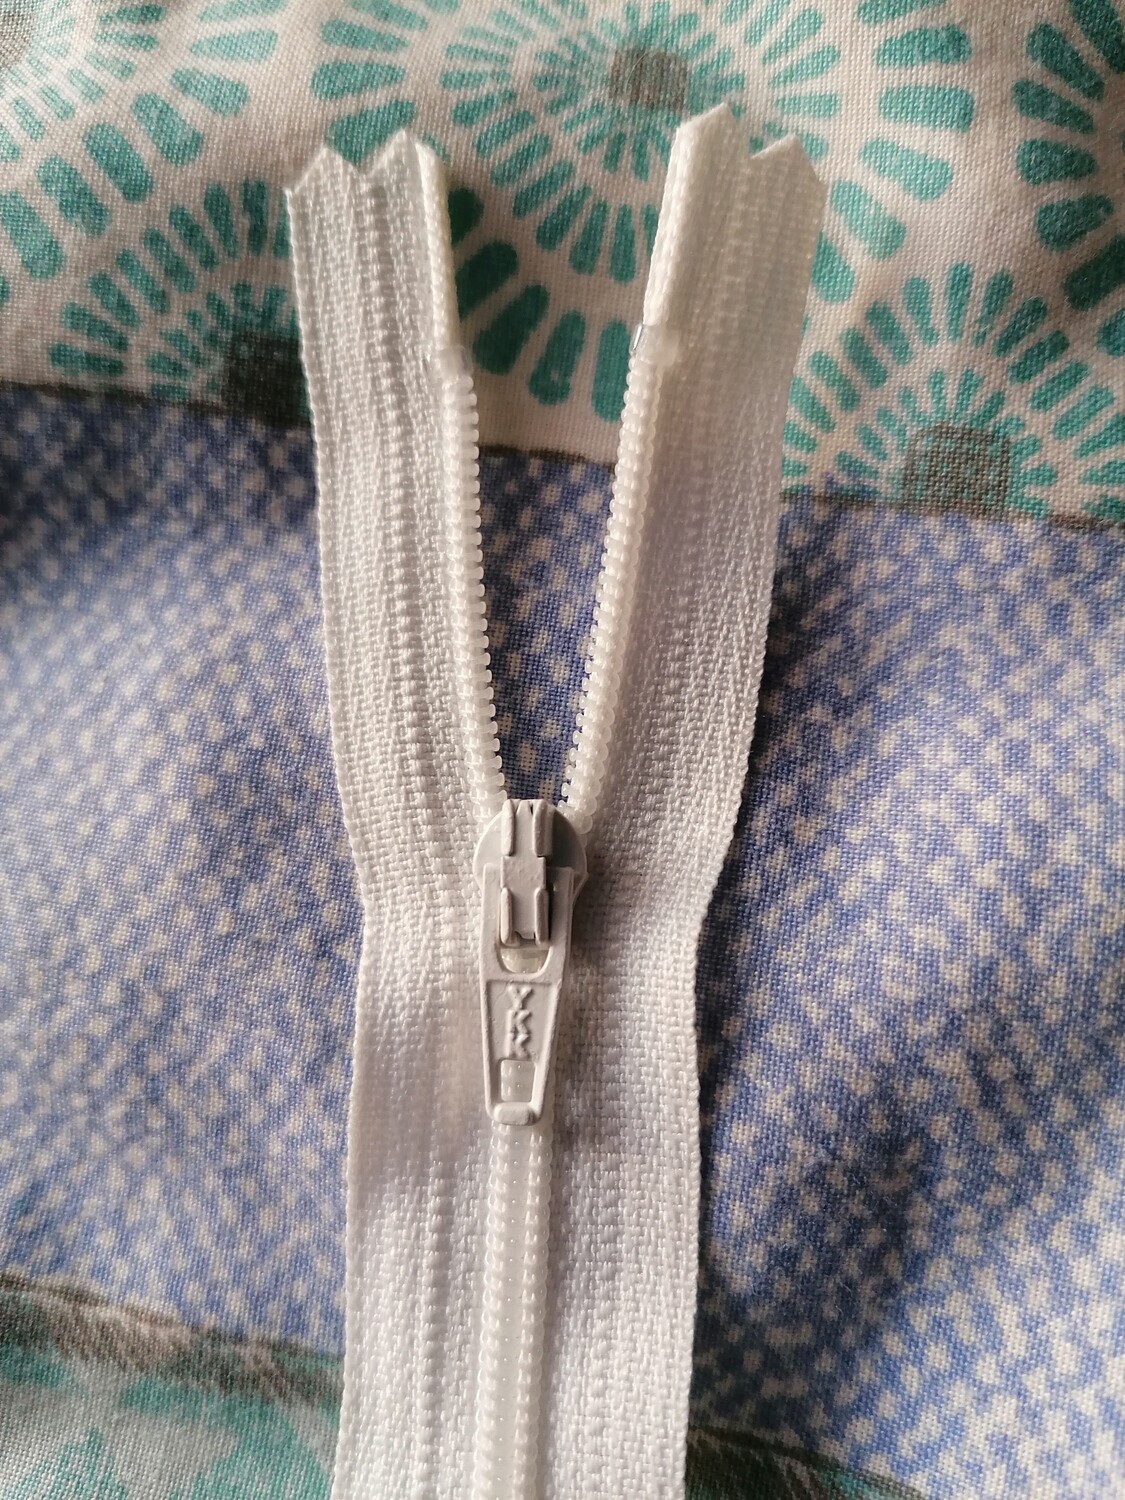 23cm (9") nylon closed end zip